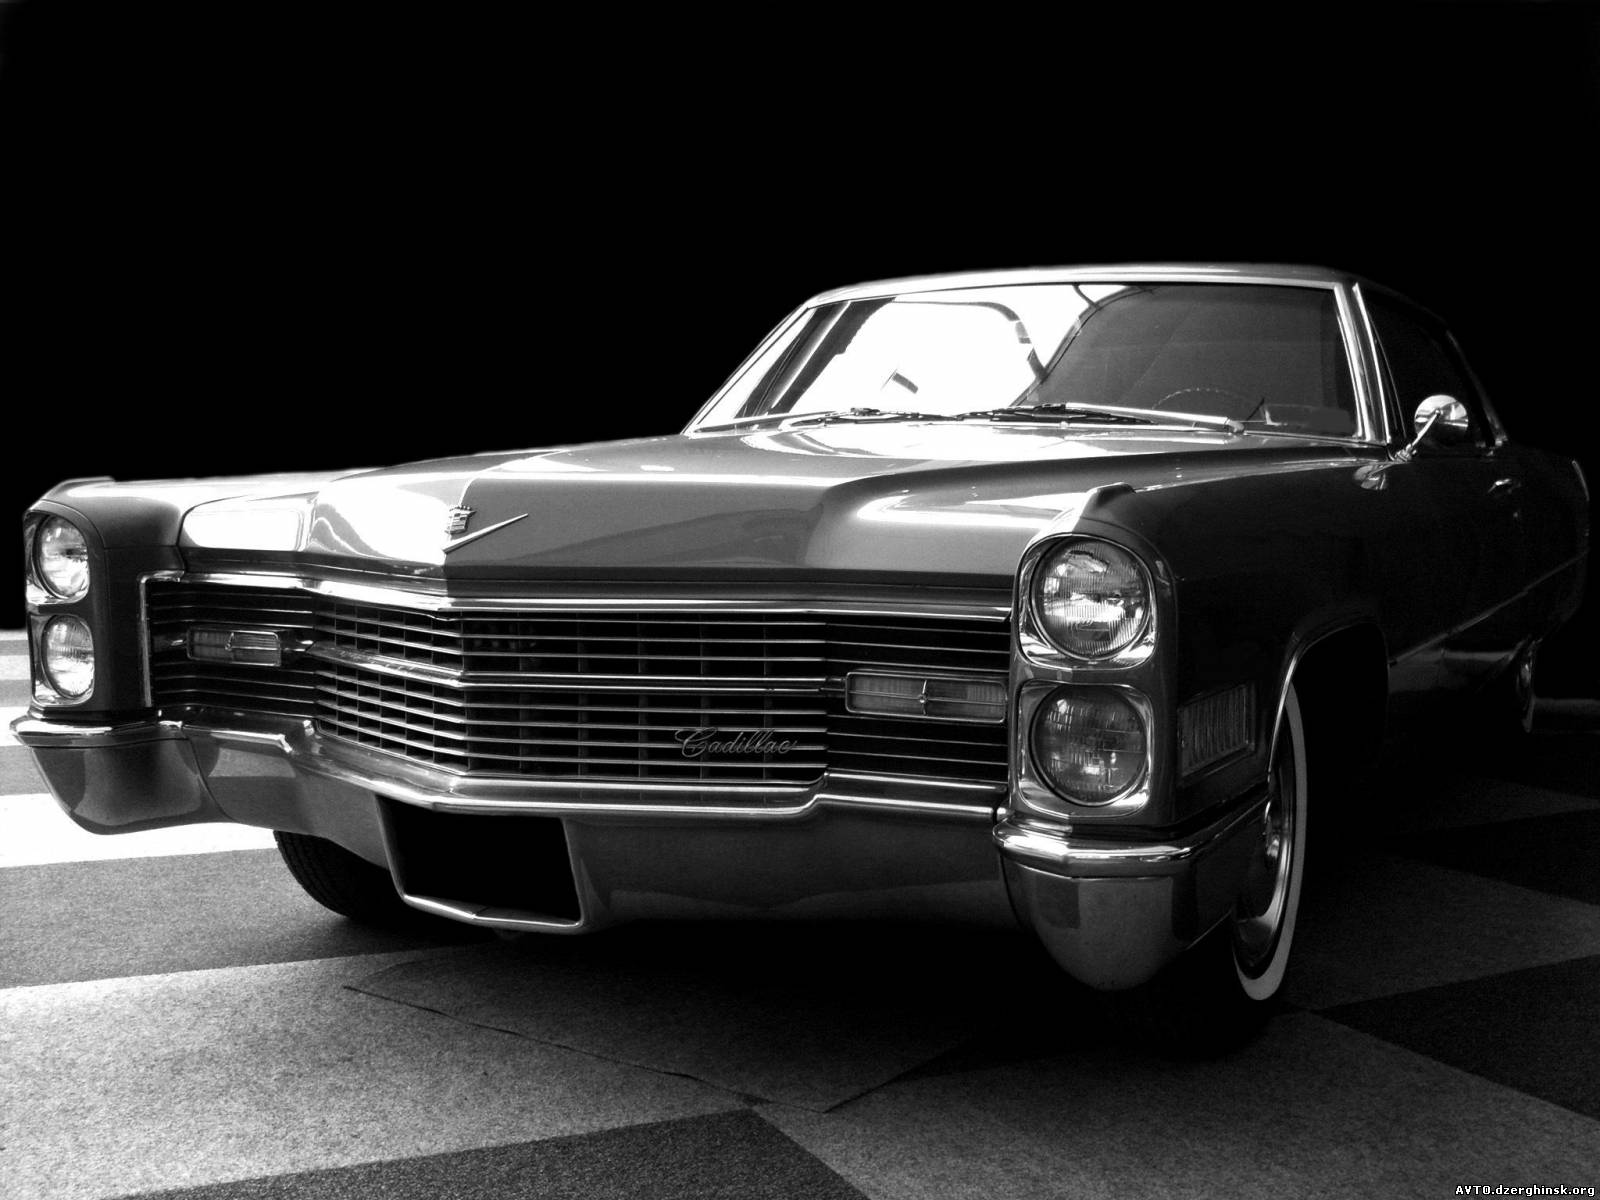 055. Cadillac Coupe deVille 1966